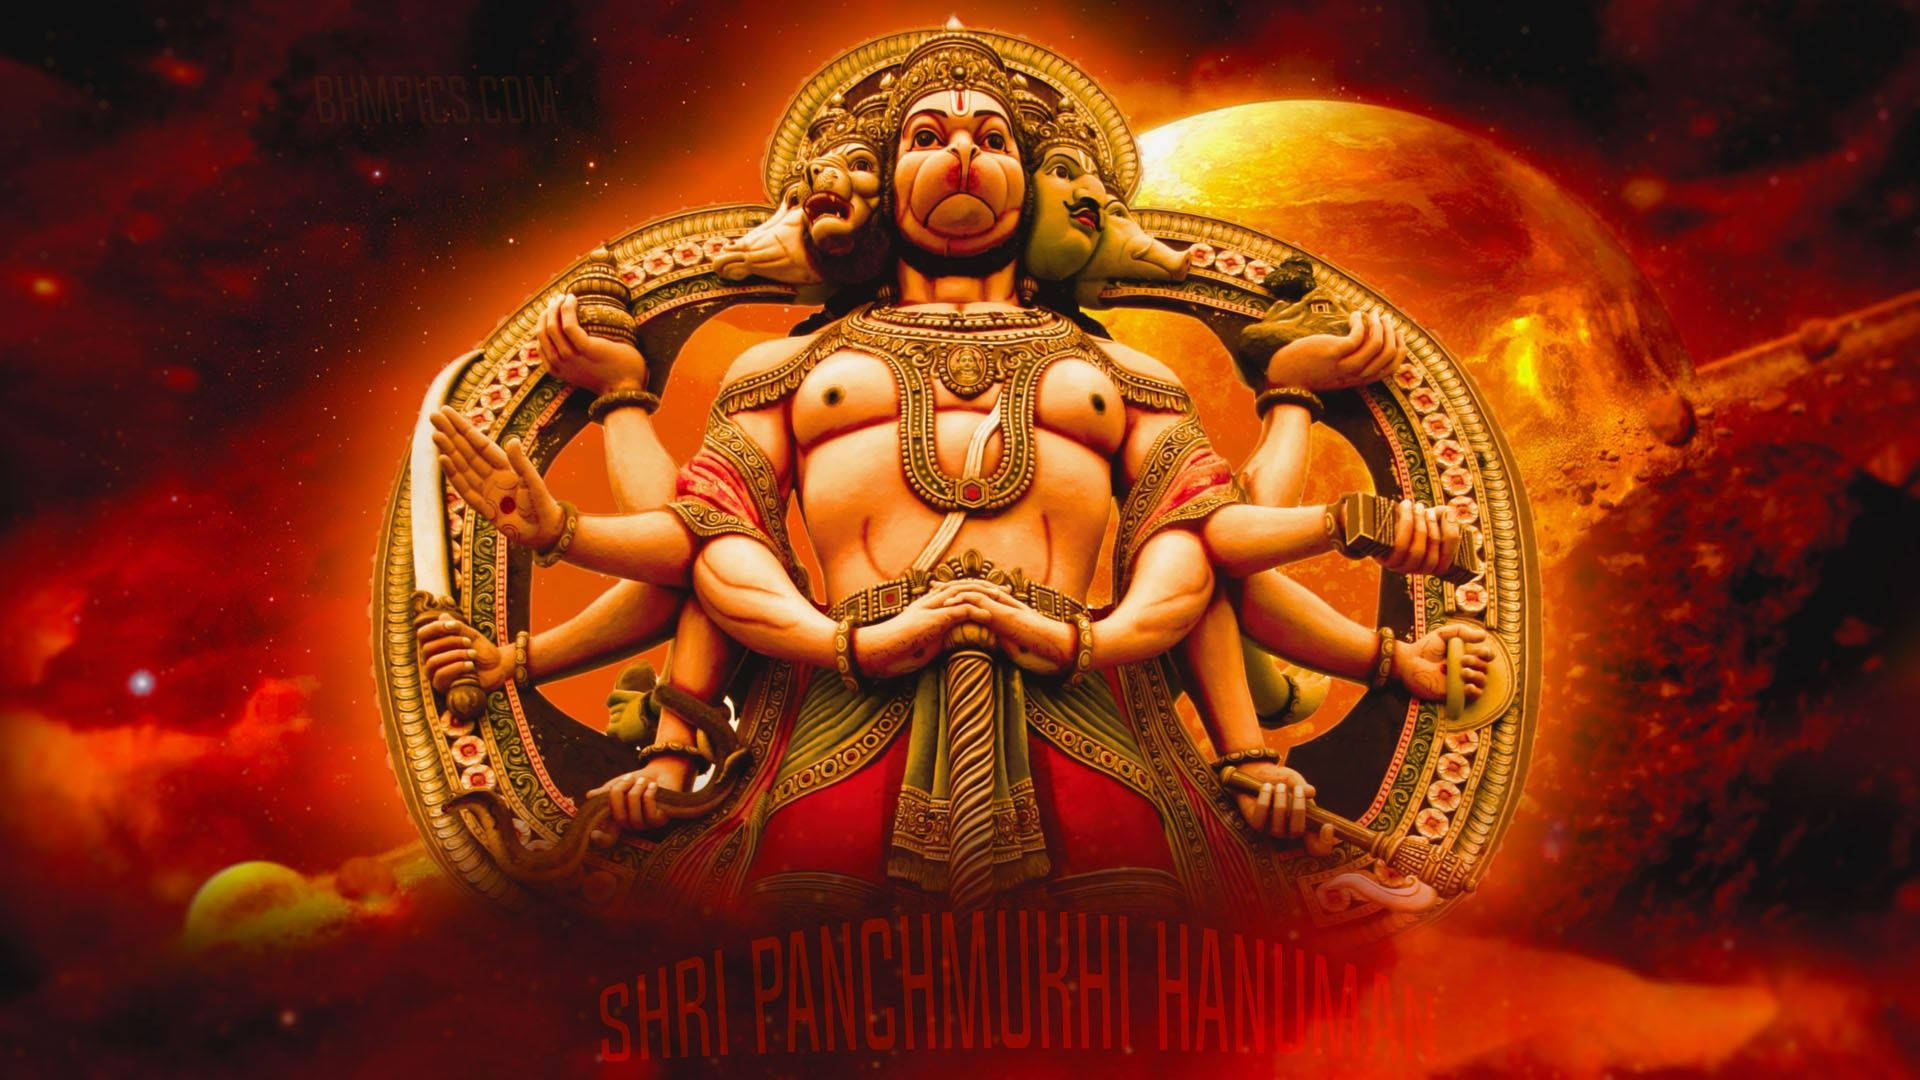 Free Angry Hanuman Wallpaper Downloads, [100+] Angry Hanuman Wallpapers for  FREE 